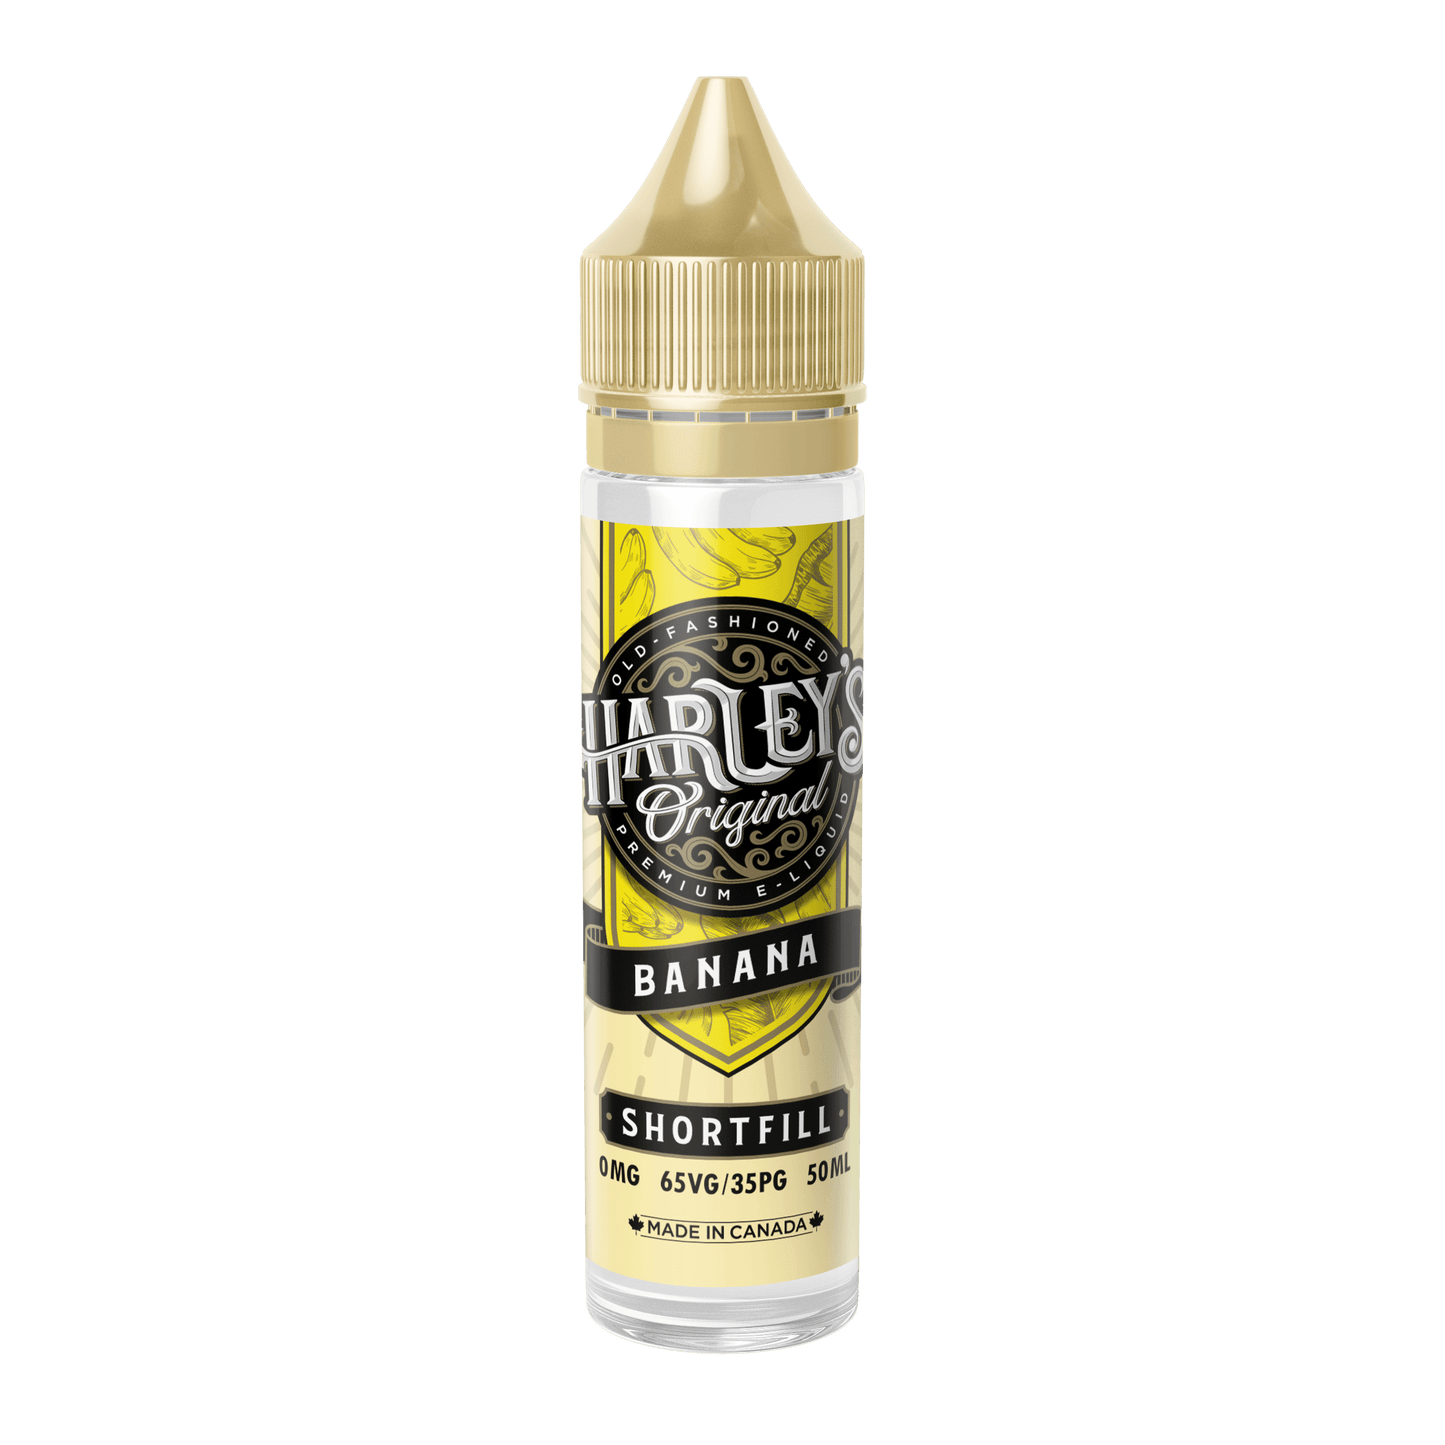 Banana E-Liquid by Harley's Original